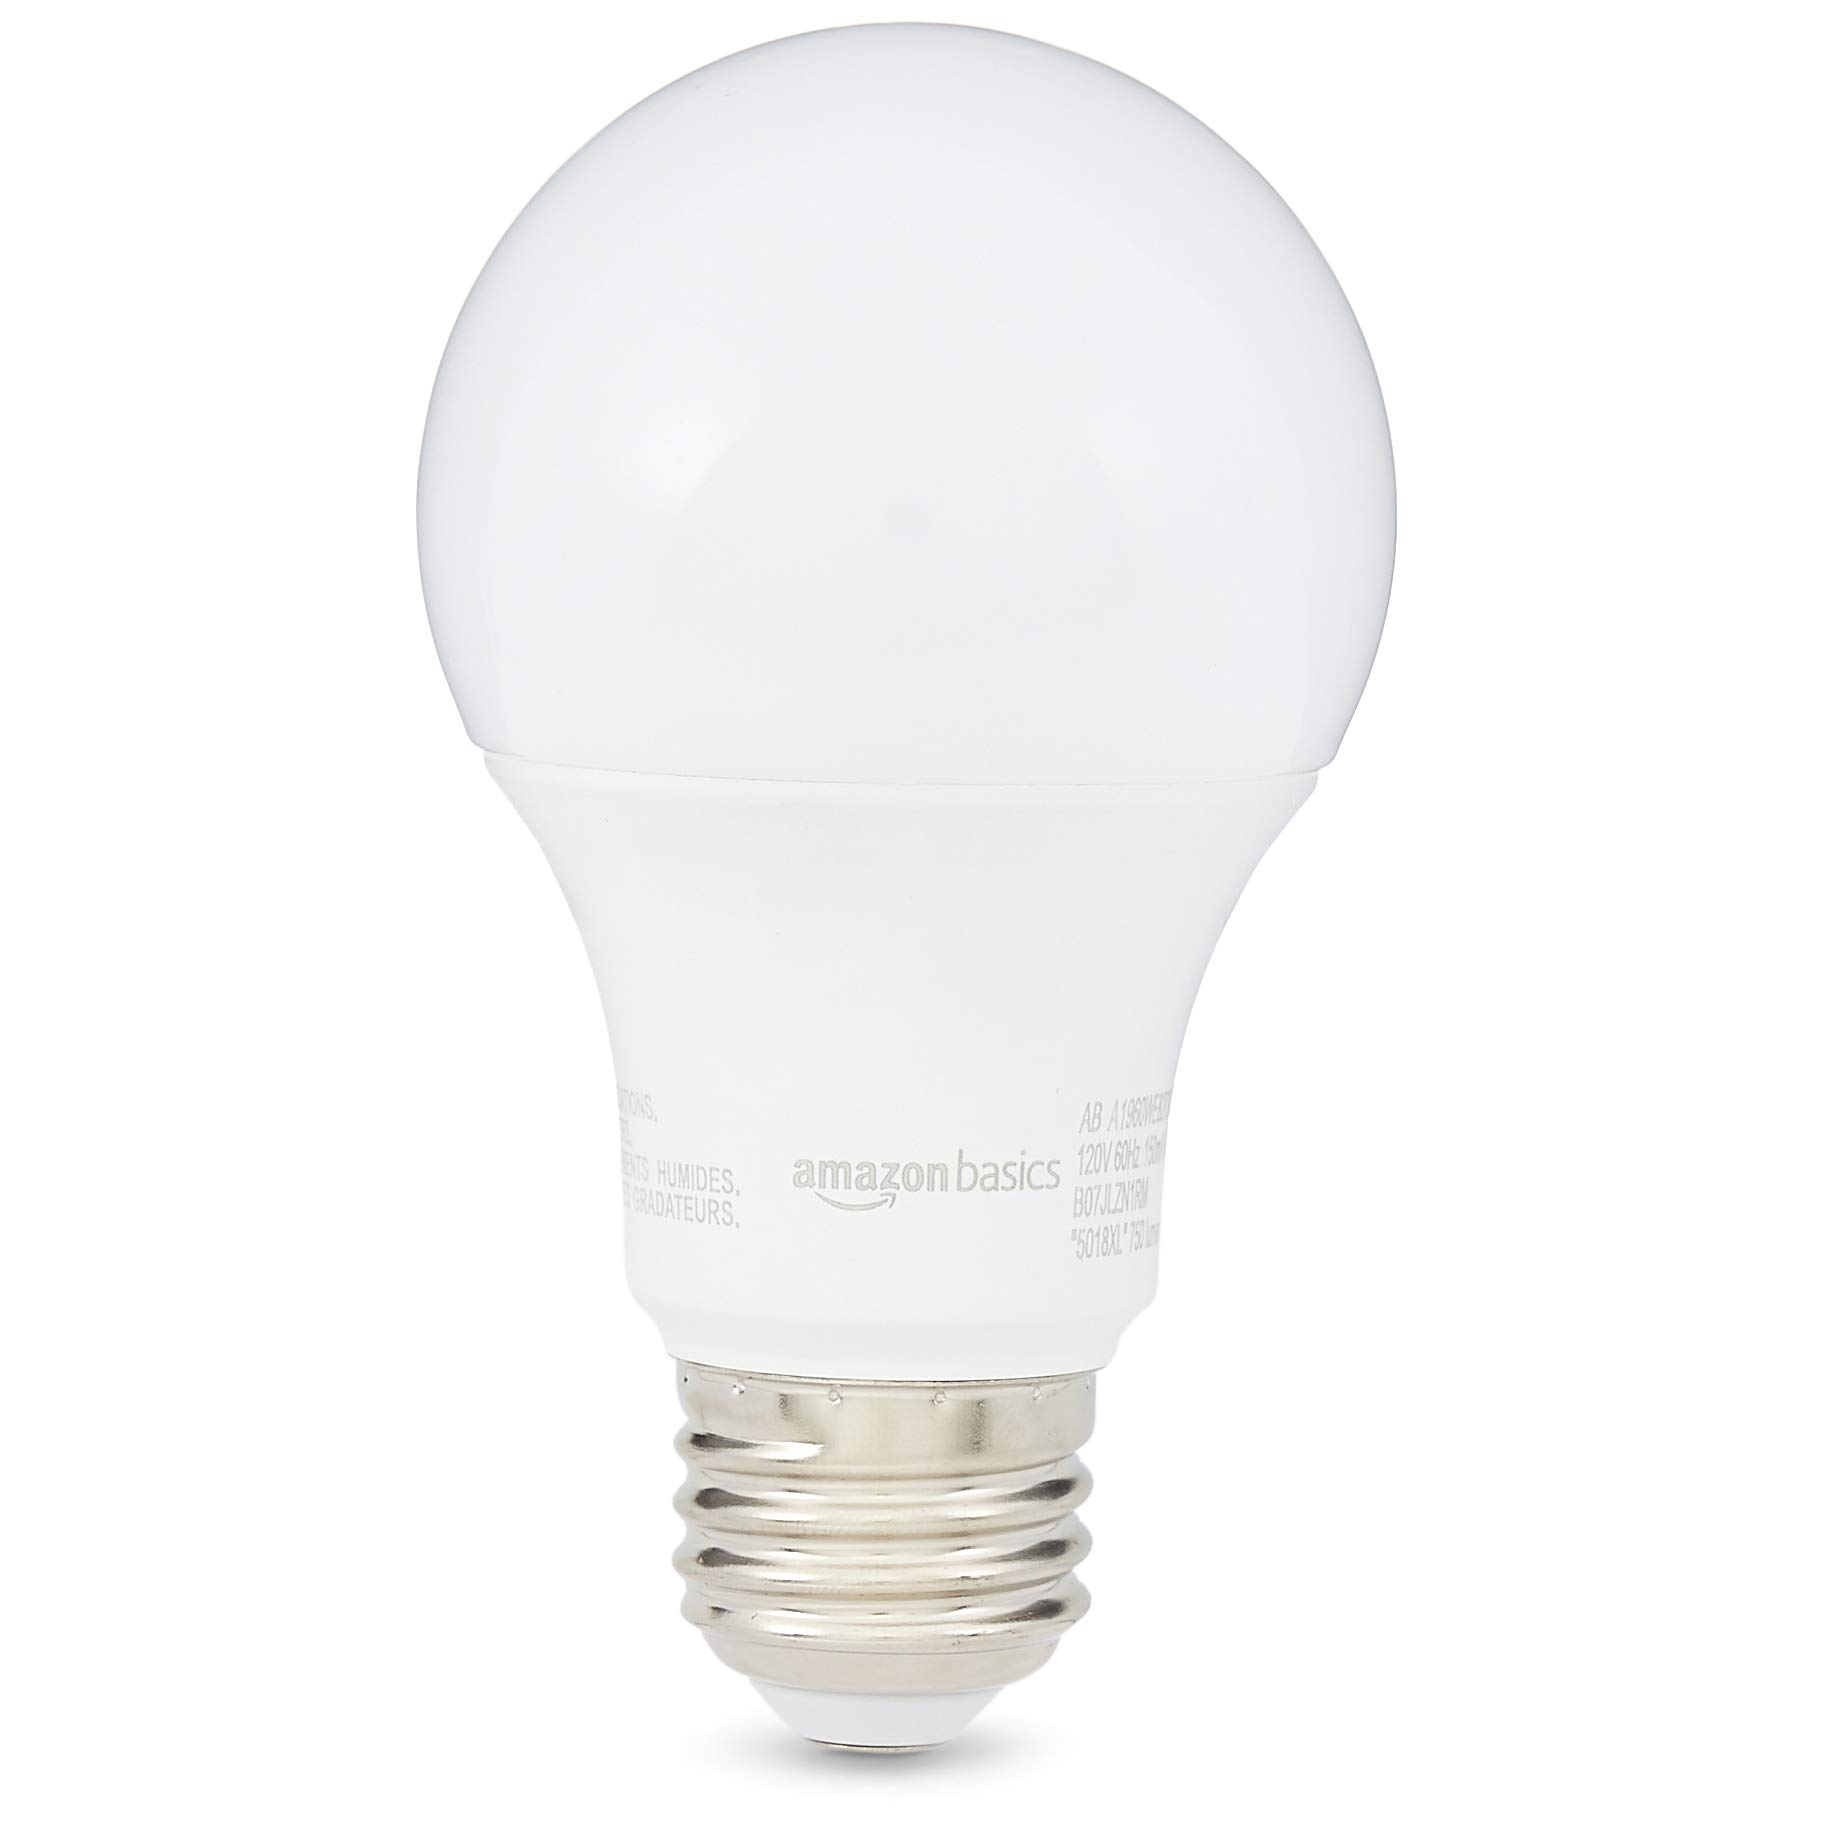 Amazon Basics 60W Equivalent, Soft White, Non-Dimmable, 10,000 Hour Lifetime, A19 LED Light Bulb , 2-Pack